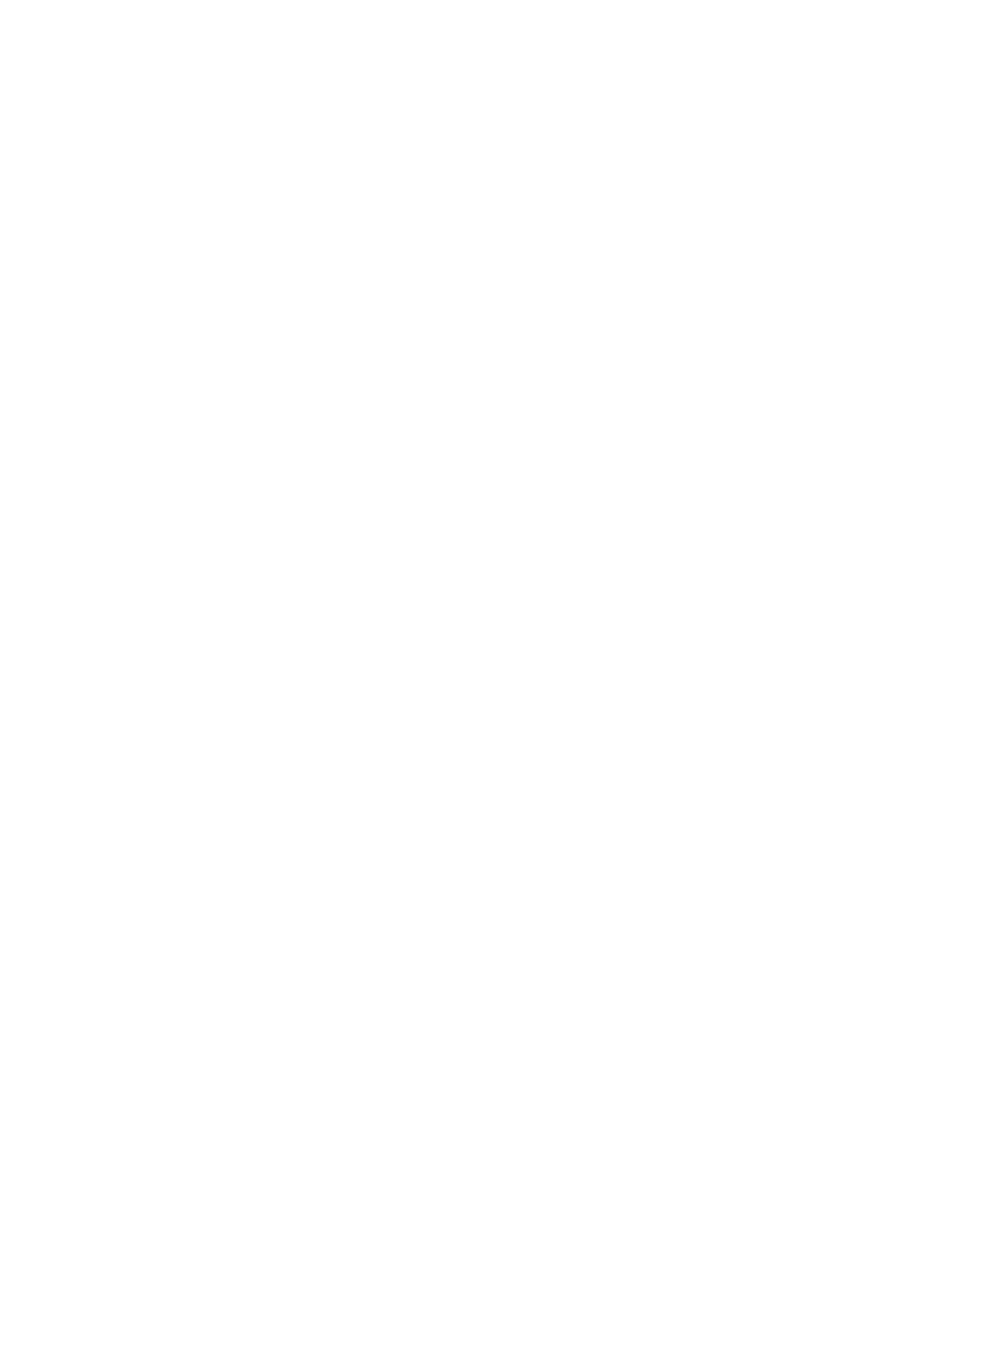 的商标Whitehorse City Council